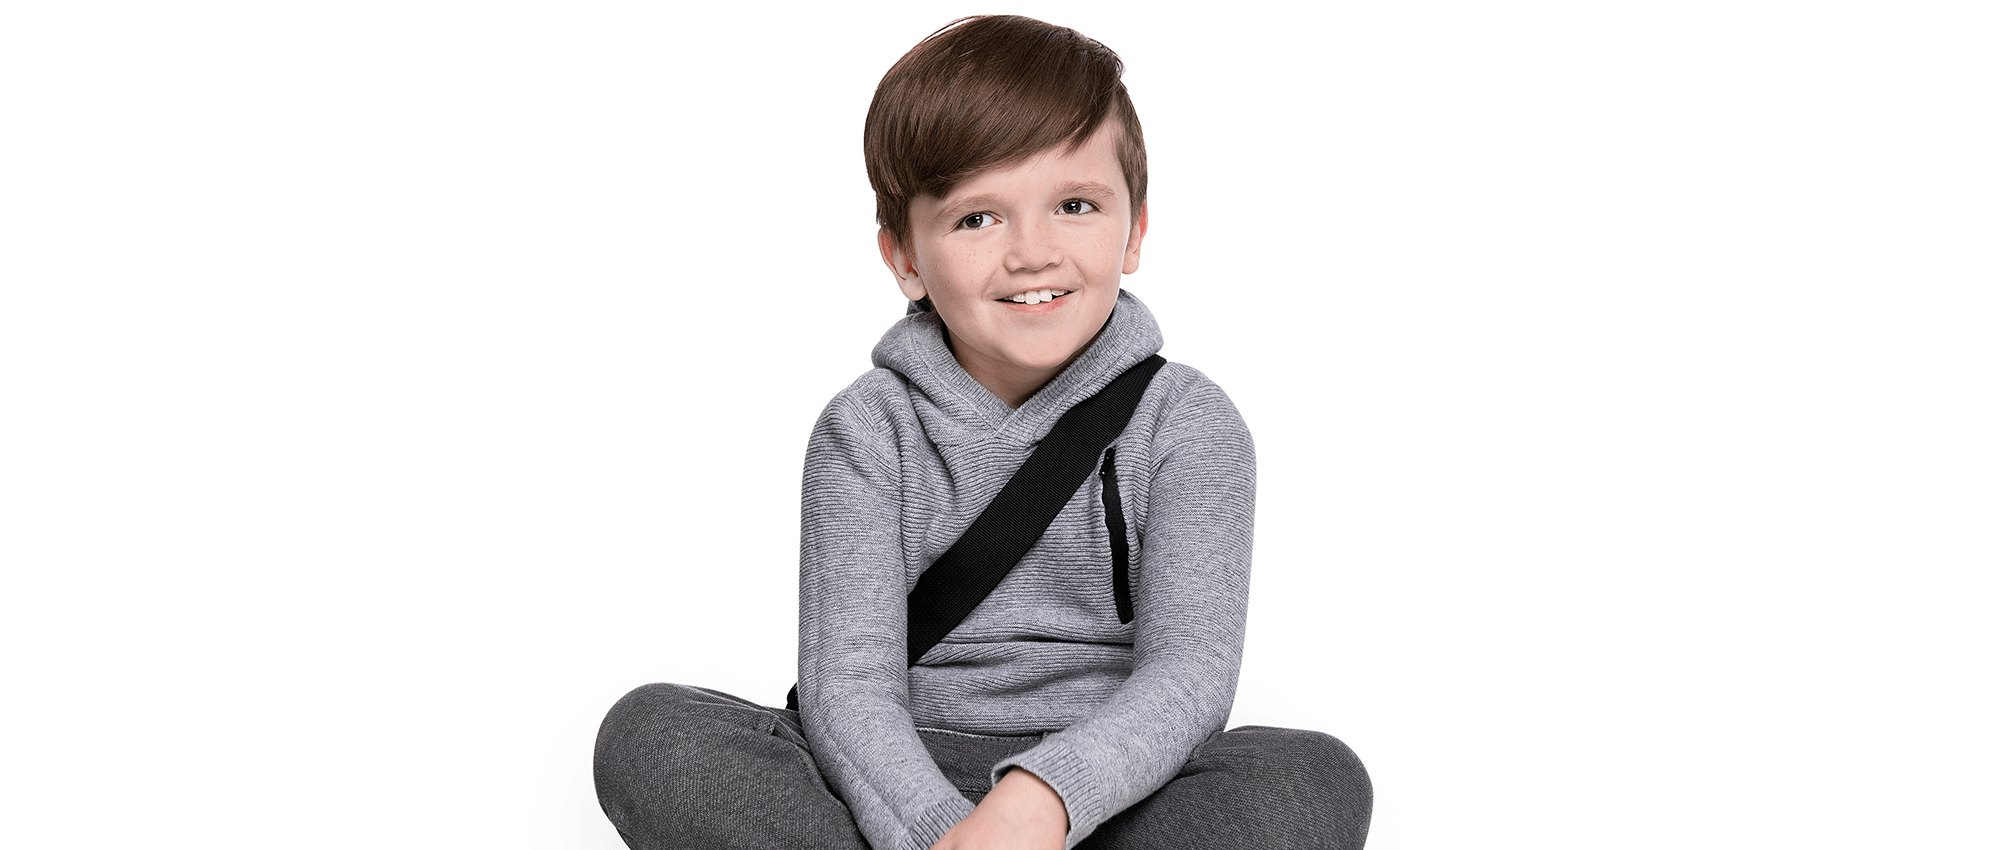 Young boy sits cross-legged, smiling